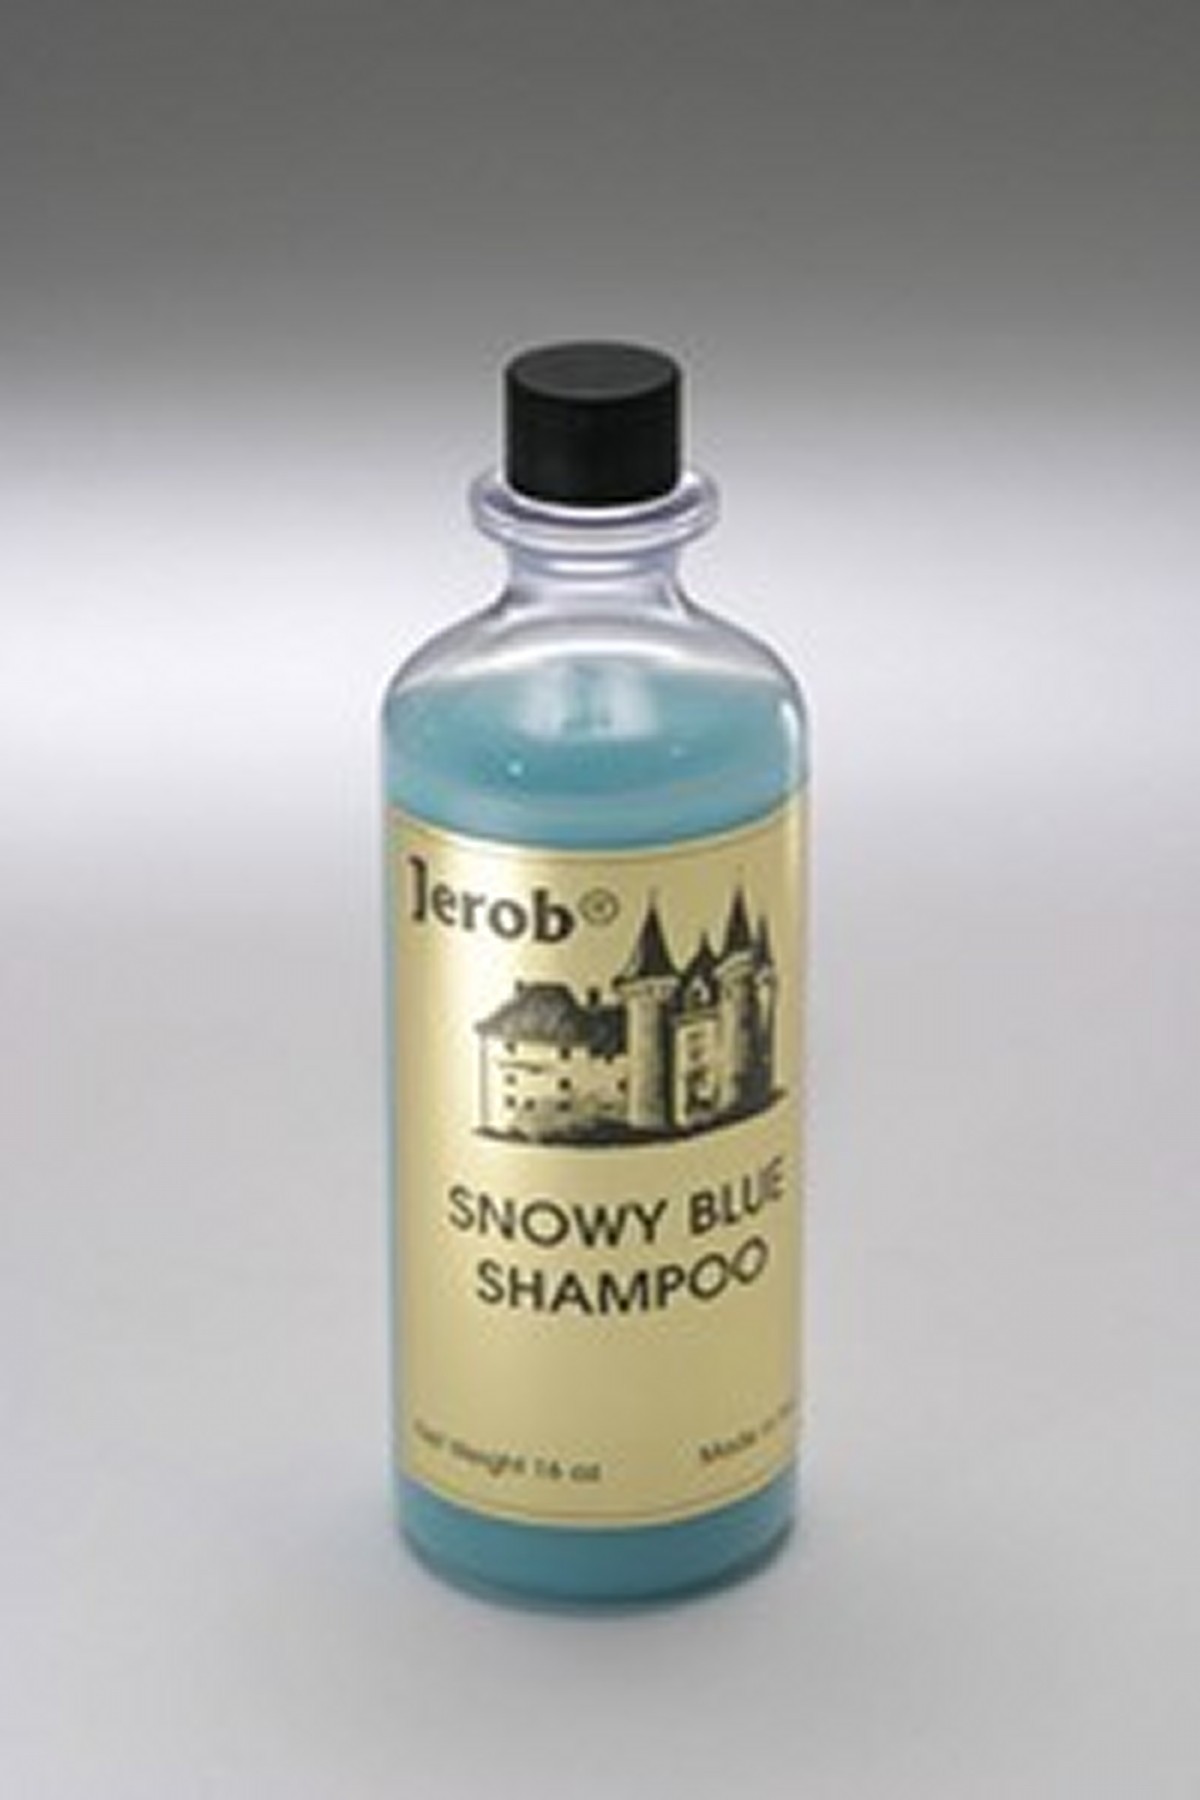 Jerob šampon Snowy Blue 236 ml